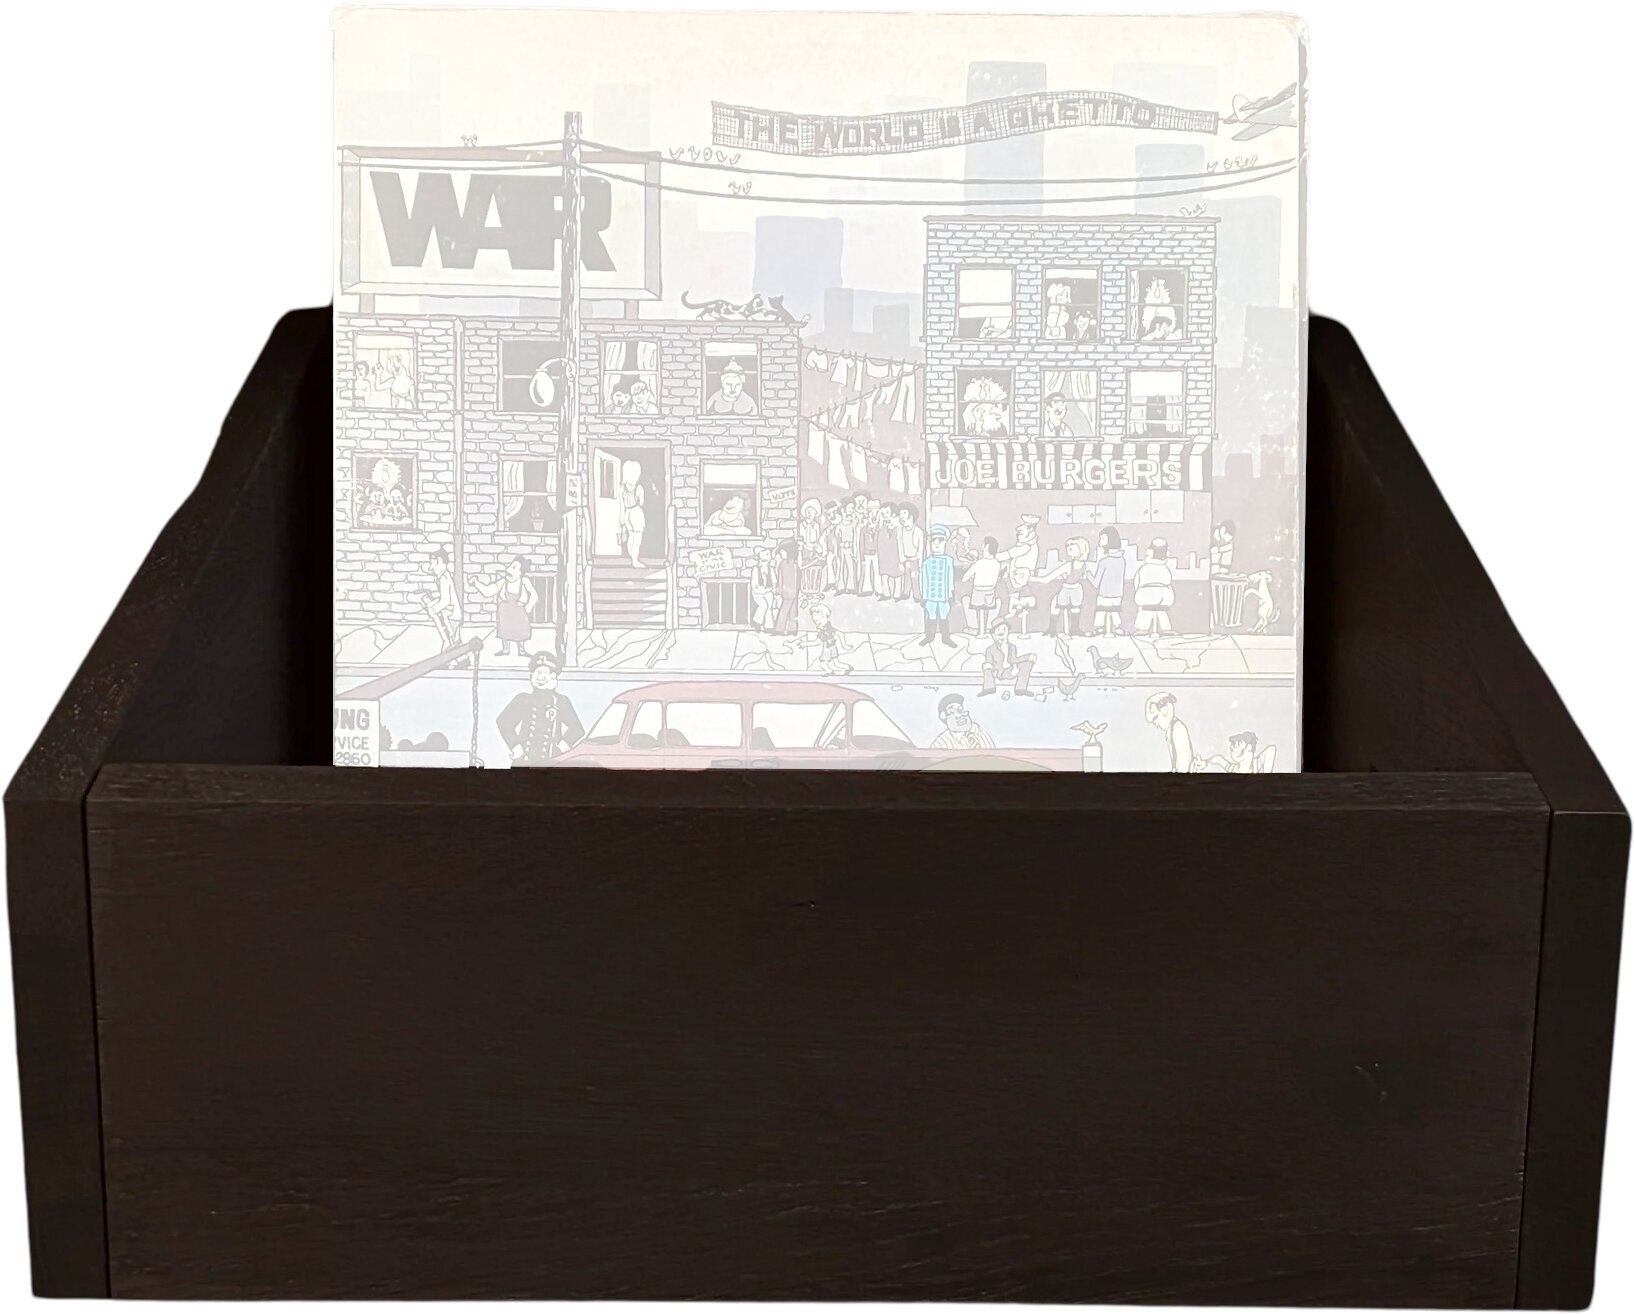 Pudełko na płyty LP Music Box Designs A Vulgar Display of Vinyl - 12 Inch Vinyl Storage Box, Black Magic